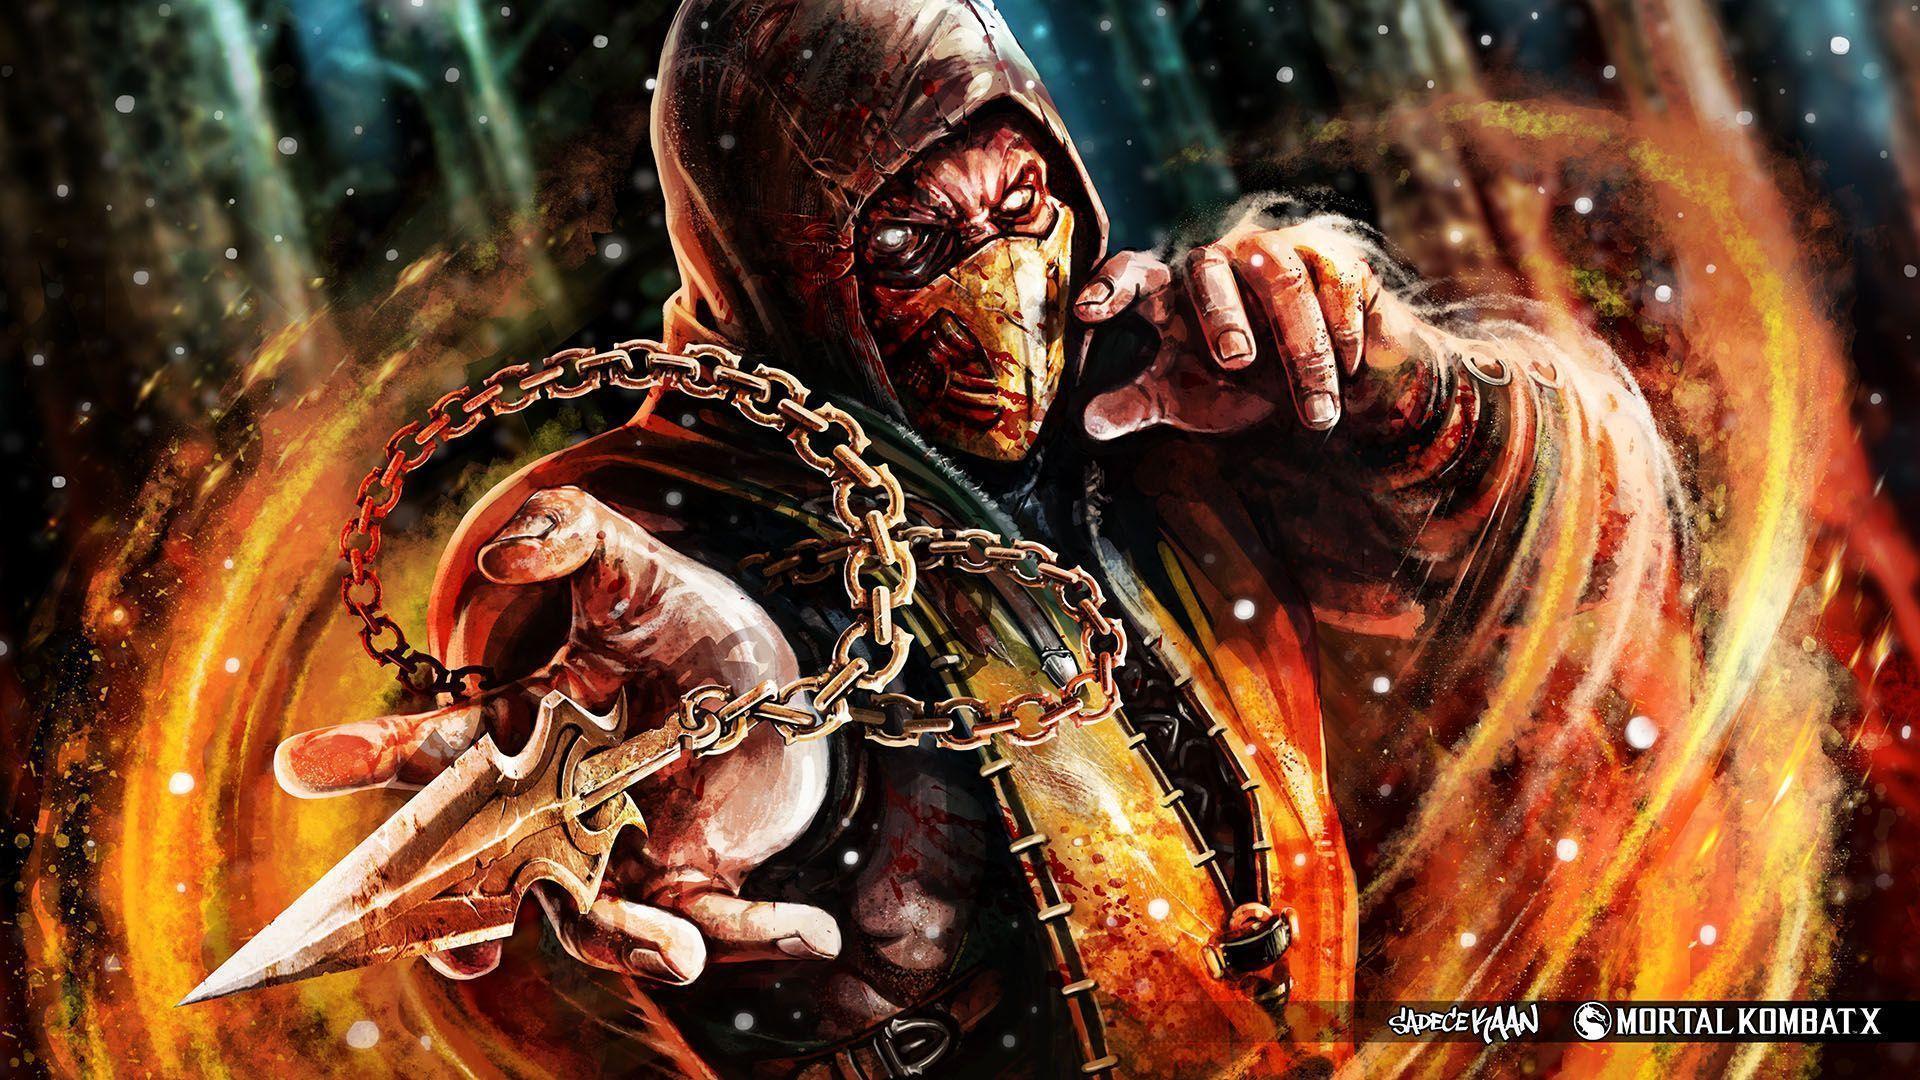 Mortal Kombat X Wallpapers Scorpion Fanart SadeceKAAN from Turkey